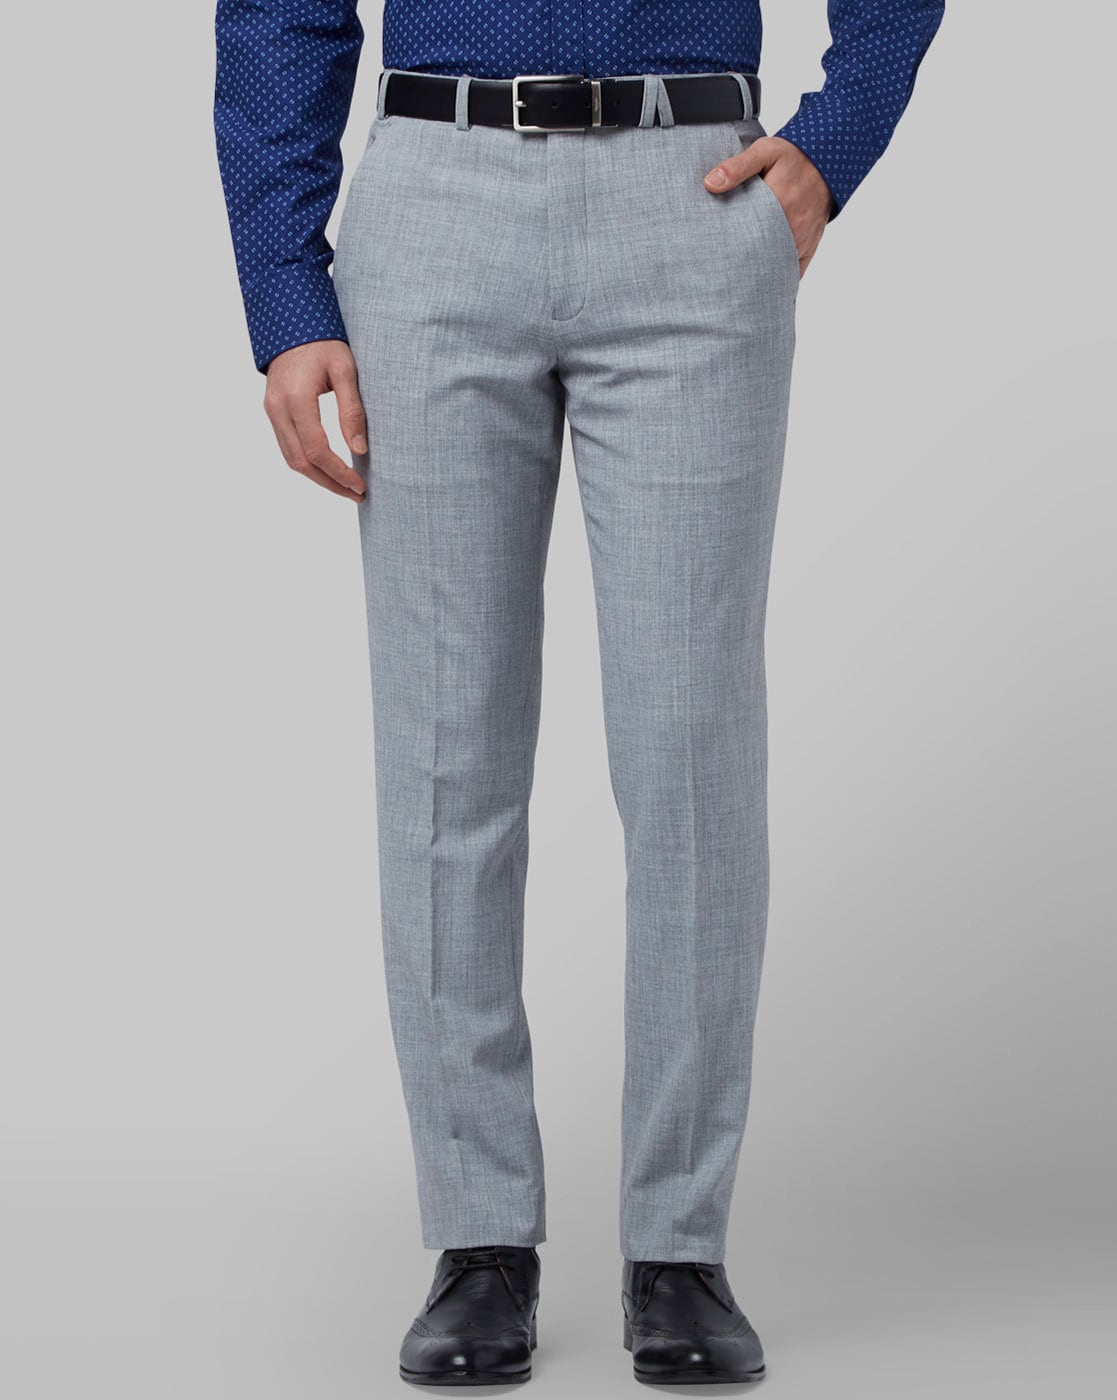 Mancrew Slim Fit Formal Pant for men  Formal Trouser Pack of 3 Dark Grey  Black Light